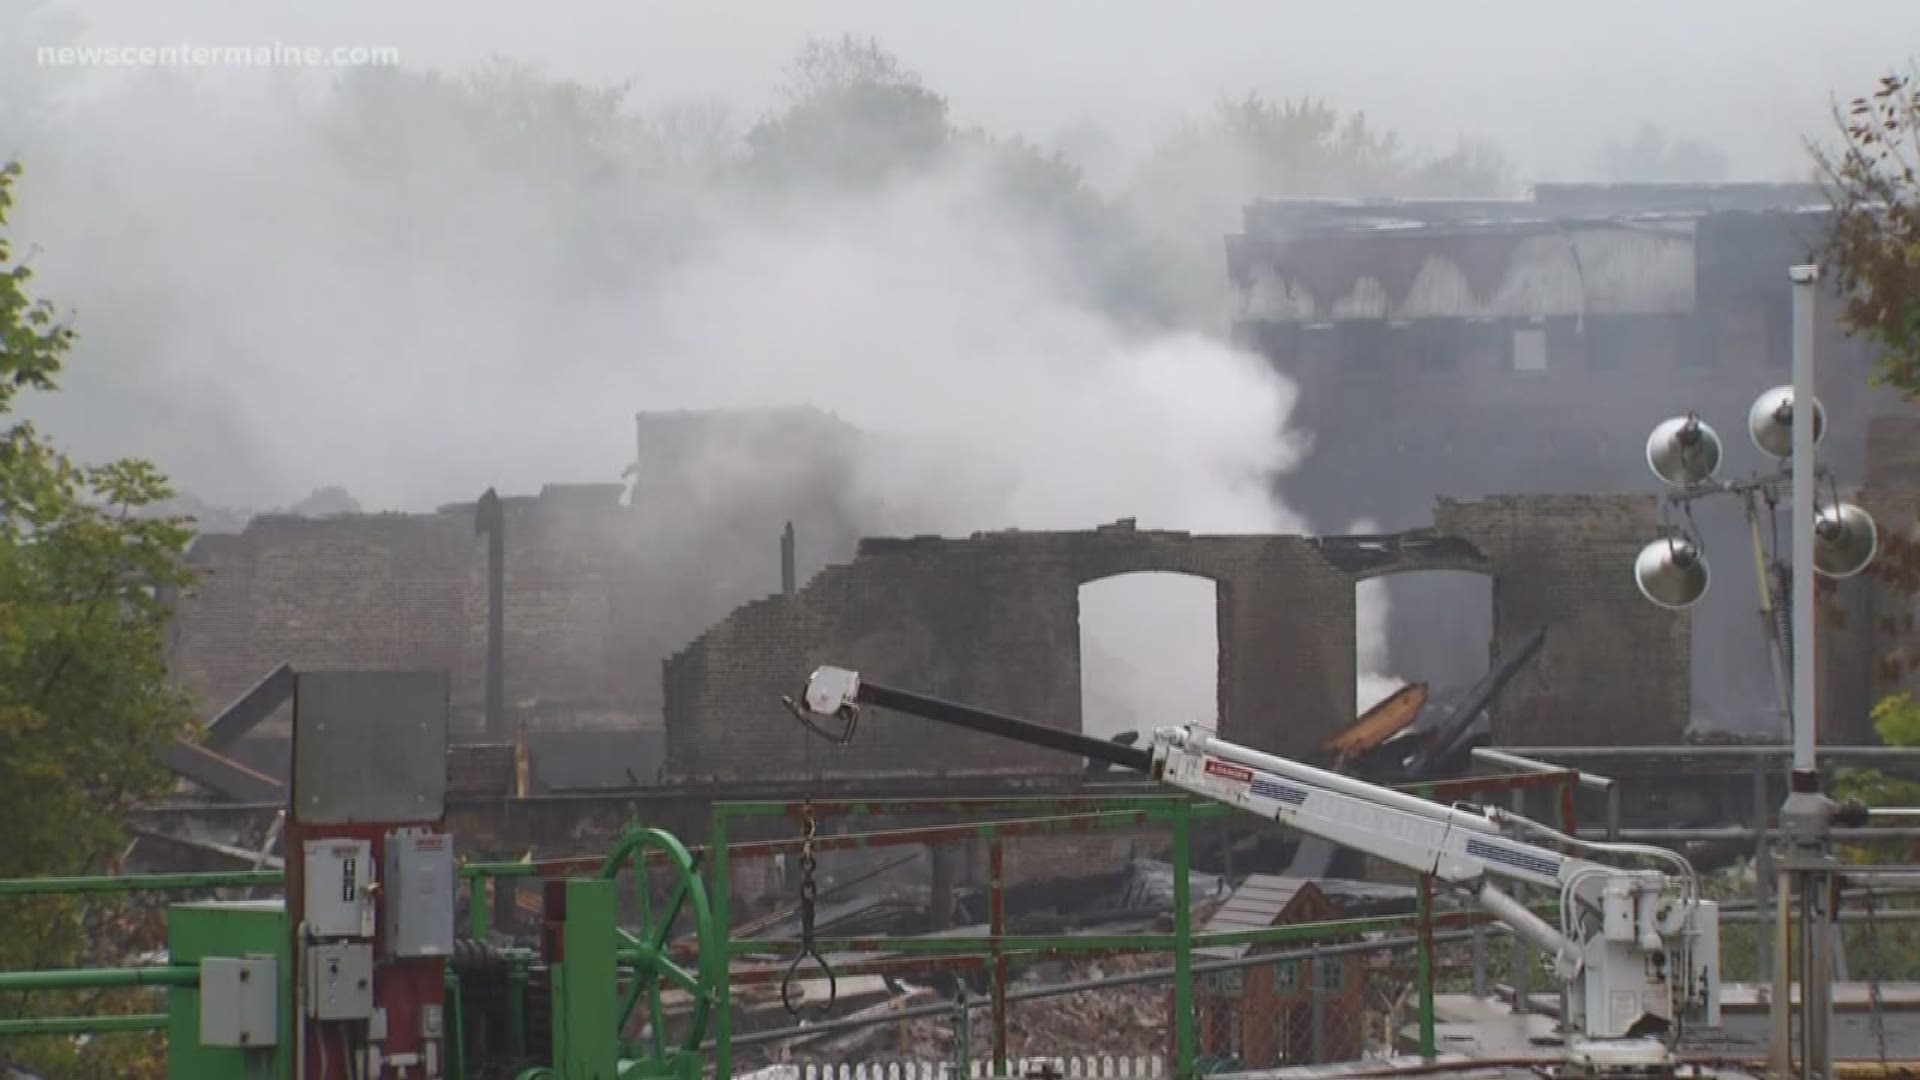 Mechanic Falls mill building fire an 'awful' loss